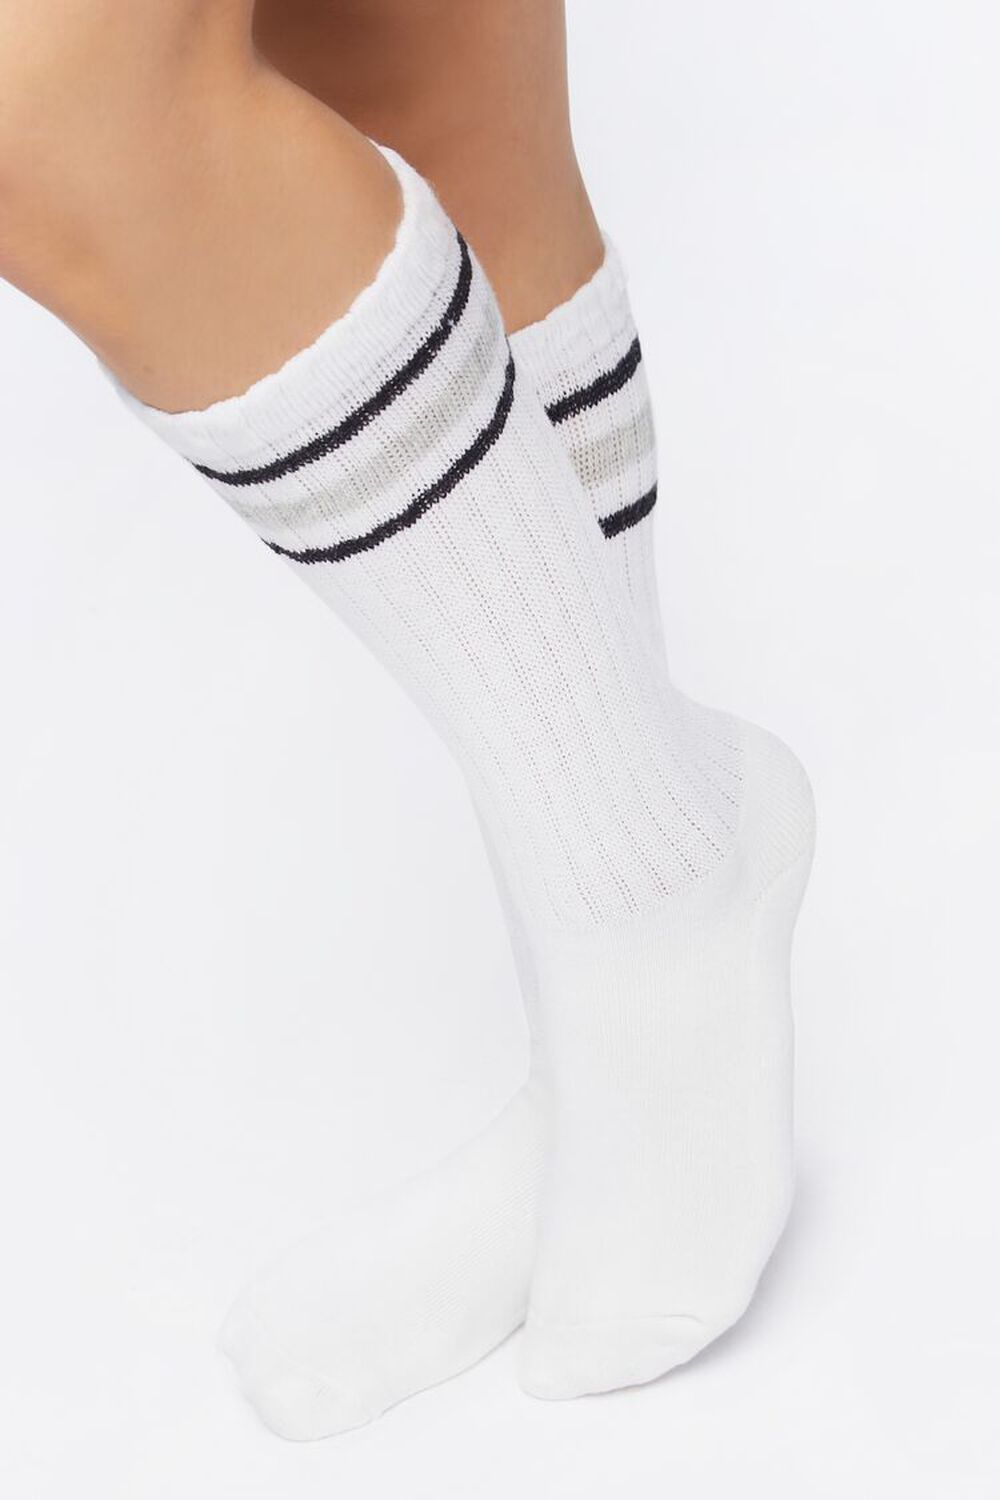 WHITE/GREY Varsity-Striped Crew Socks, image 1